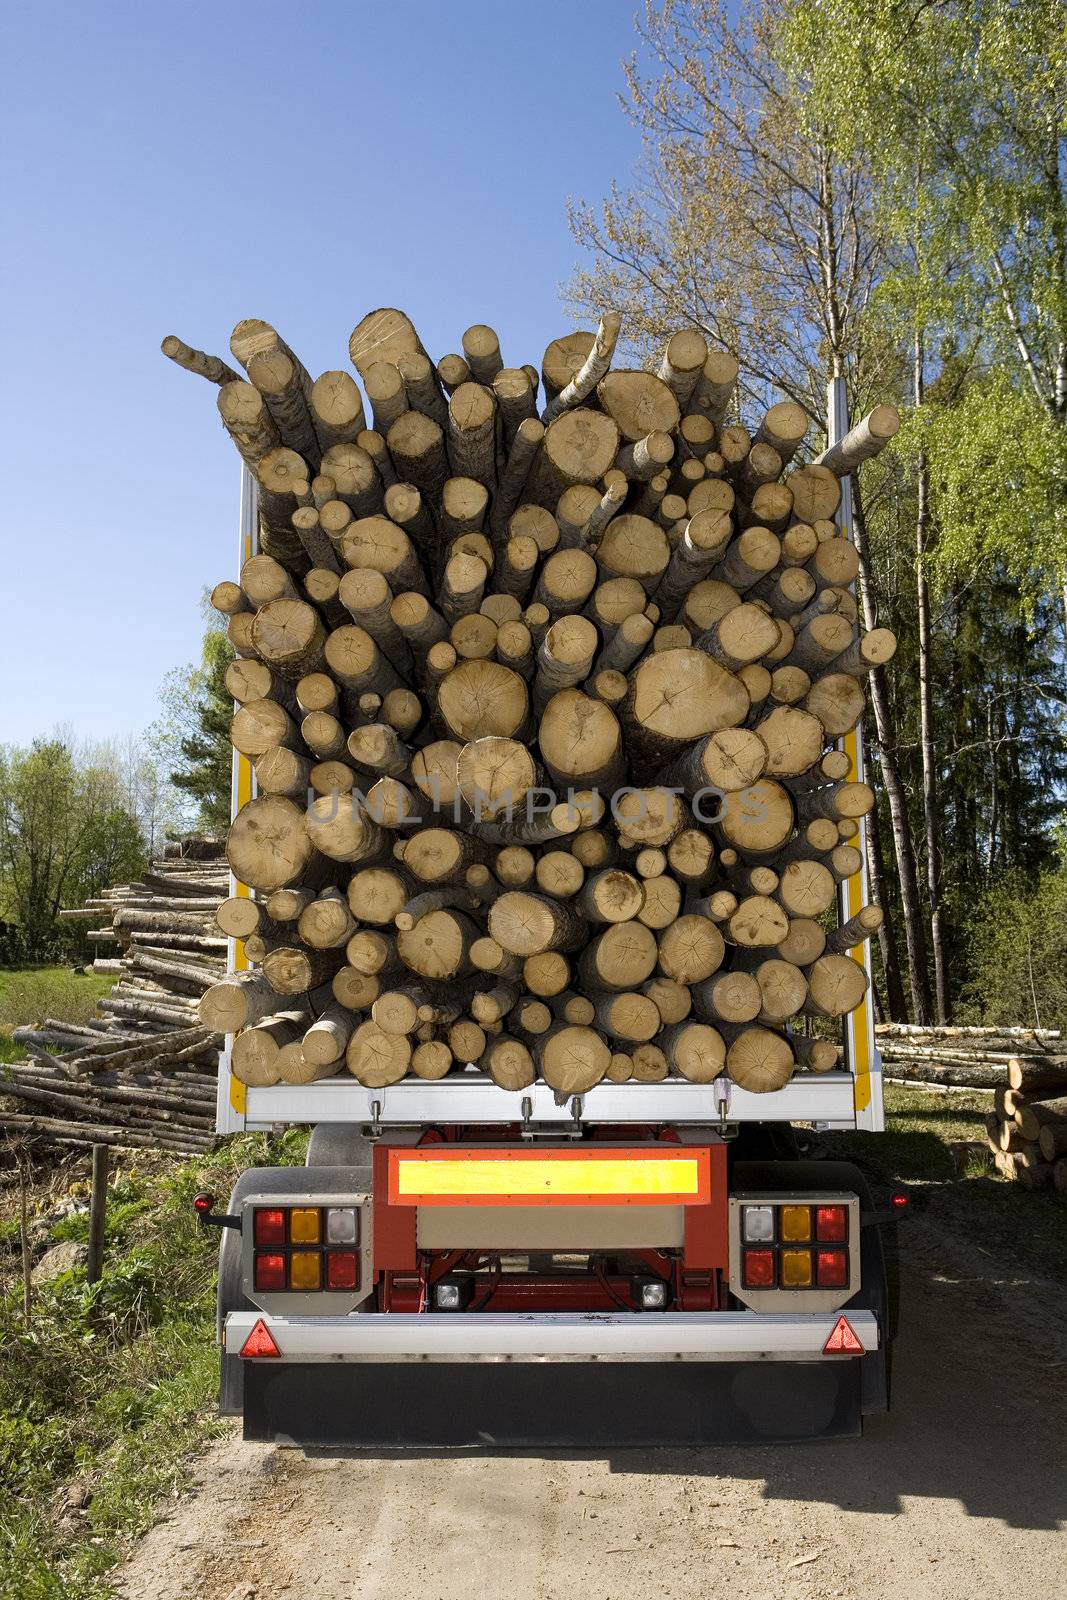 Loaded Timber by gemenacom